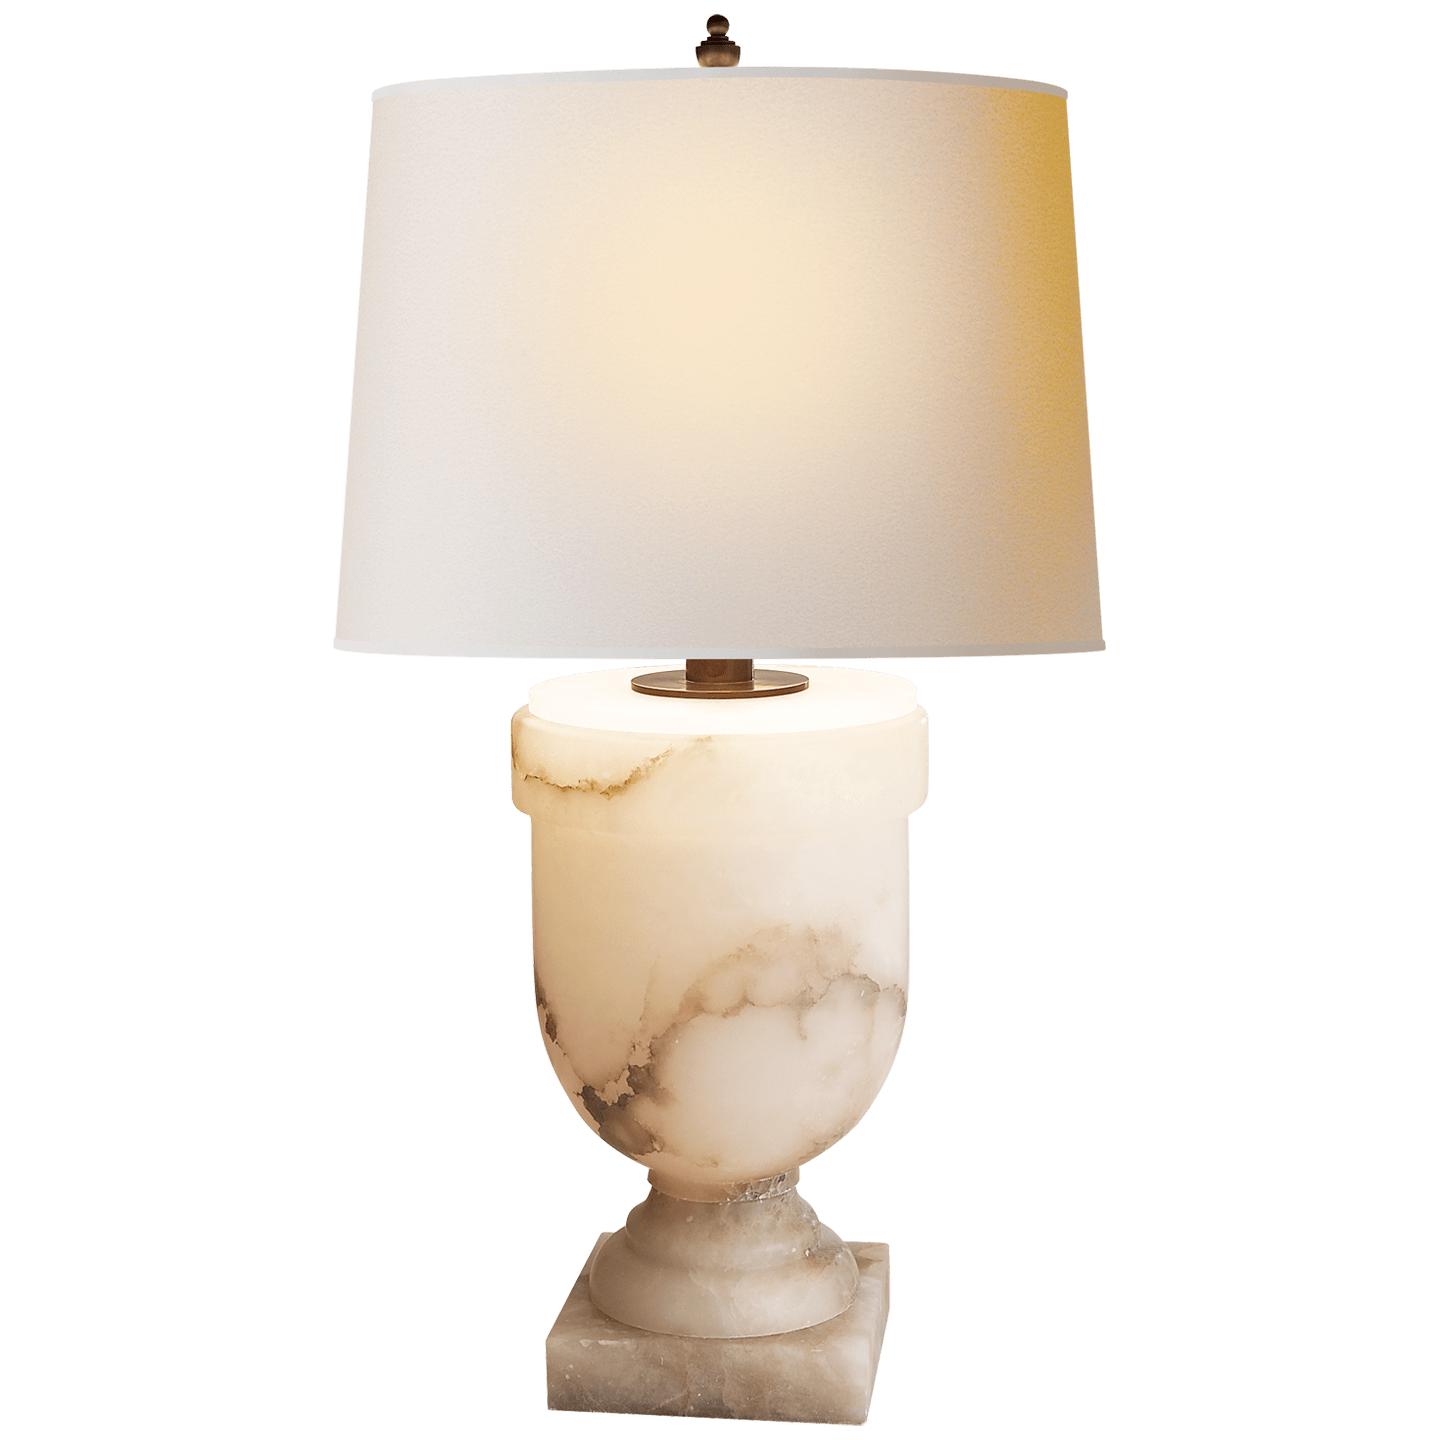 Купить Настольная лампа Chunky Urn Large Table Lamp в интернет-магазине roooms.ru